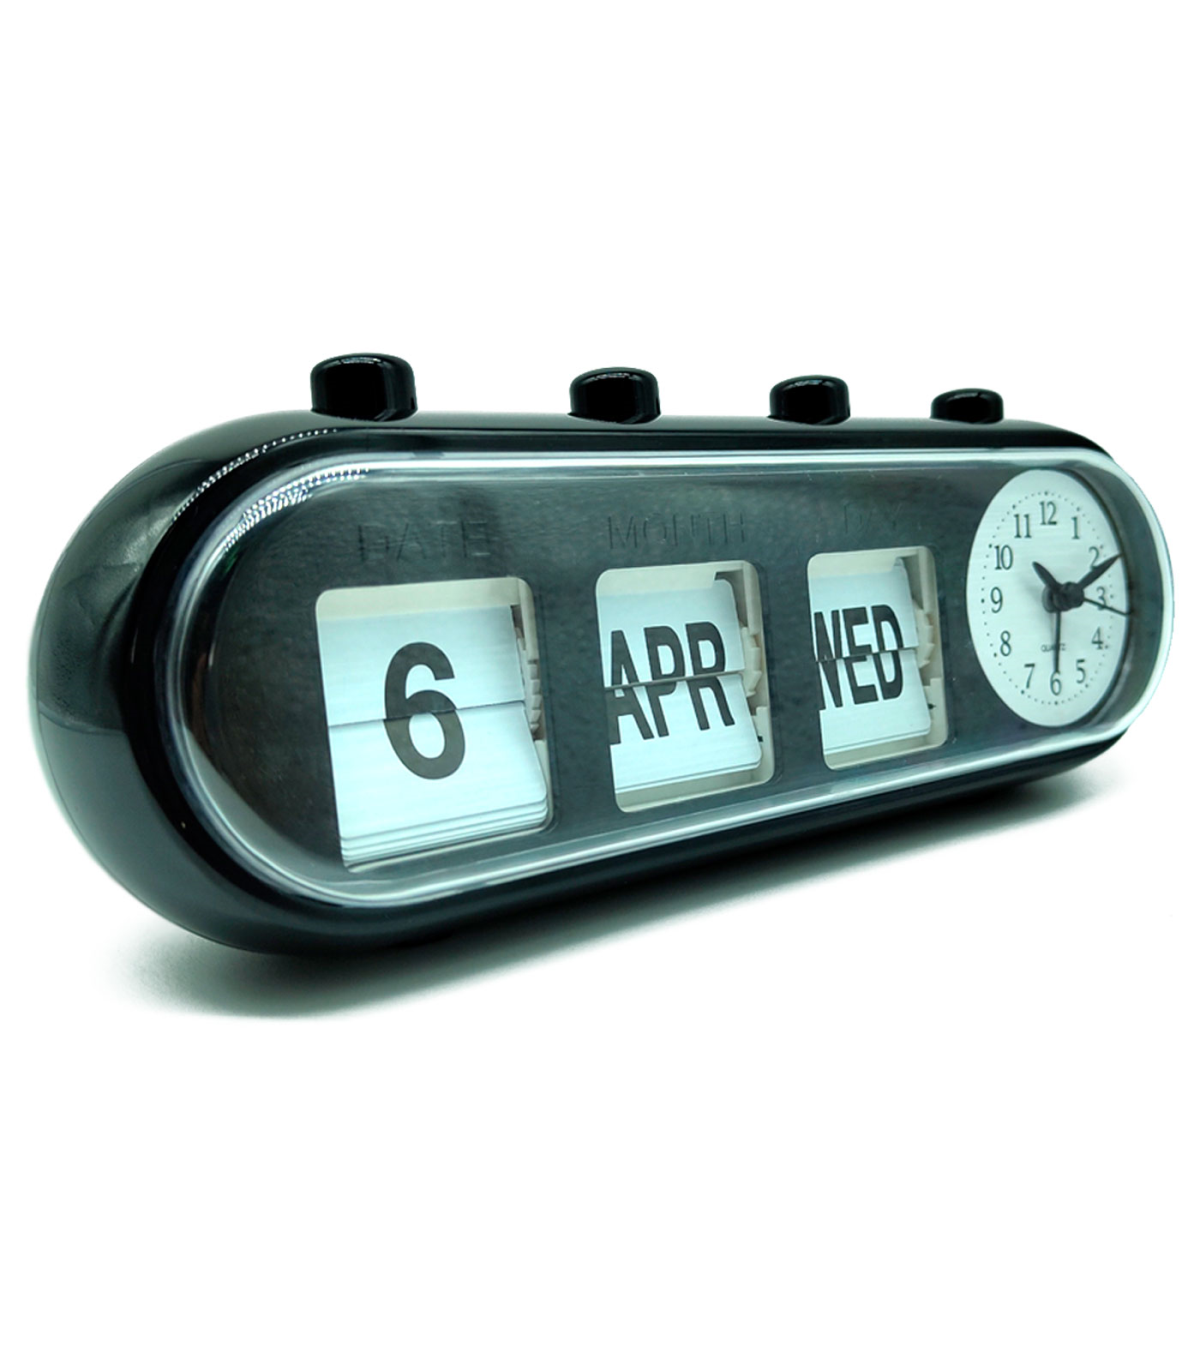 Tradineur - Reloj Despertador Vintage Modelo Titan - Fecha abatible -  También incluye reloj analógico - 9 x 24 x 7 cm